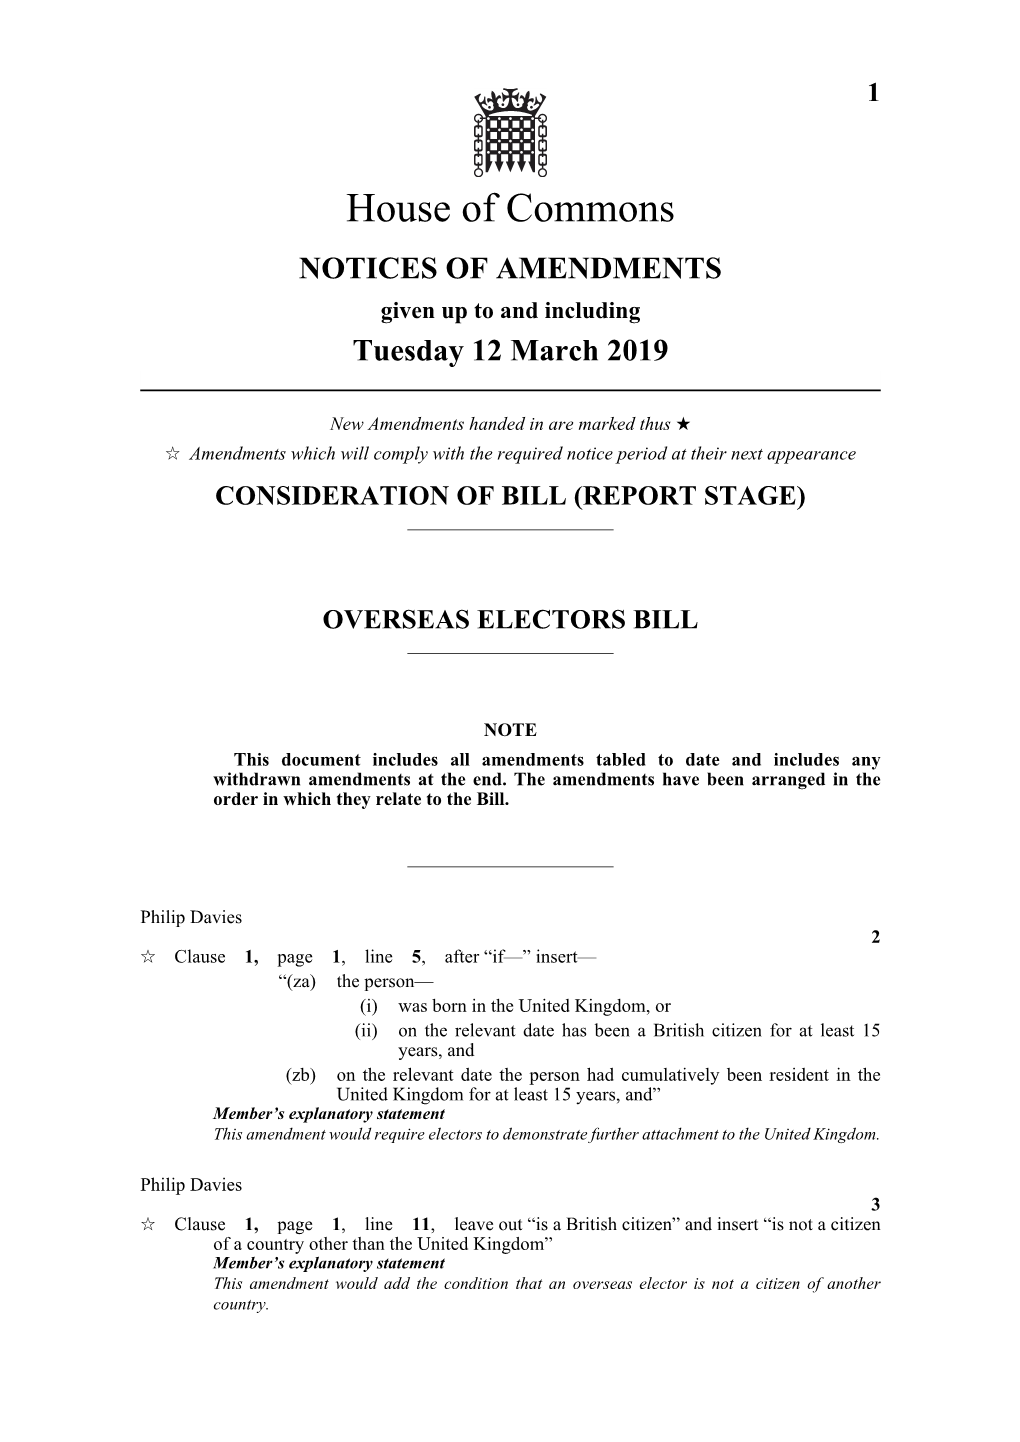 Overseas Electors Bill